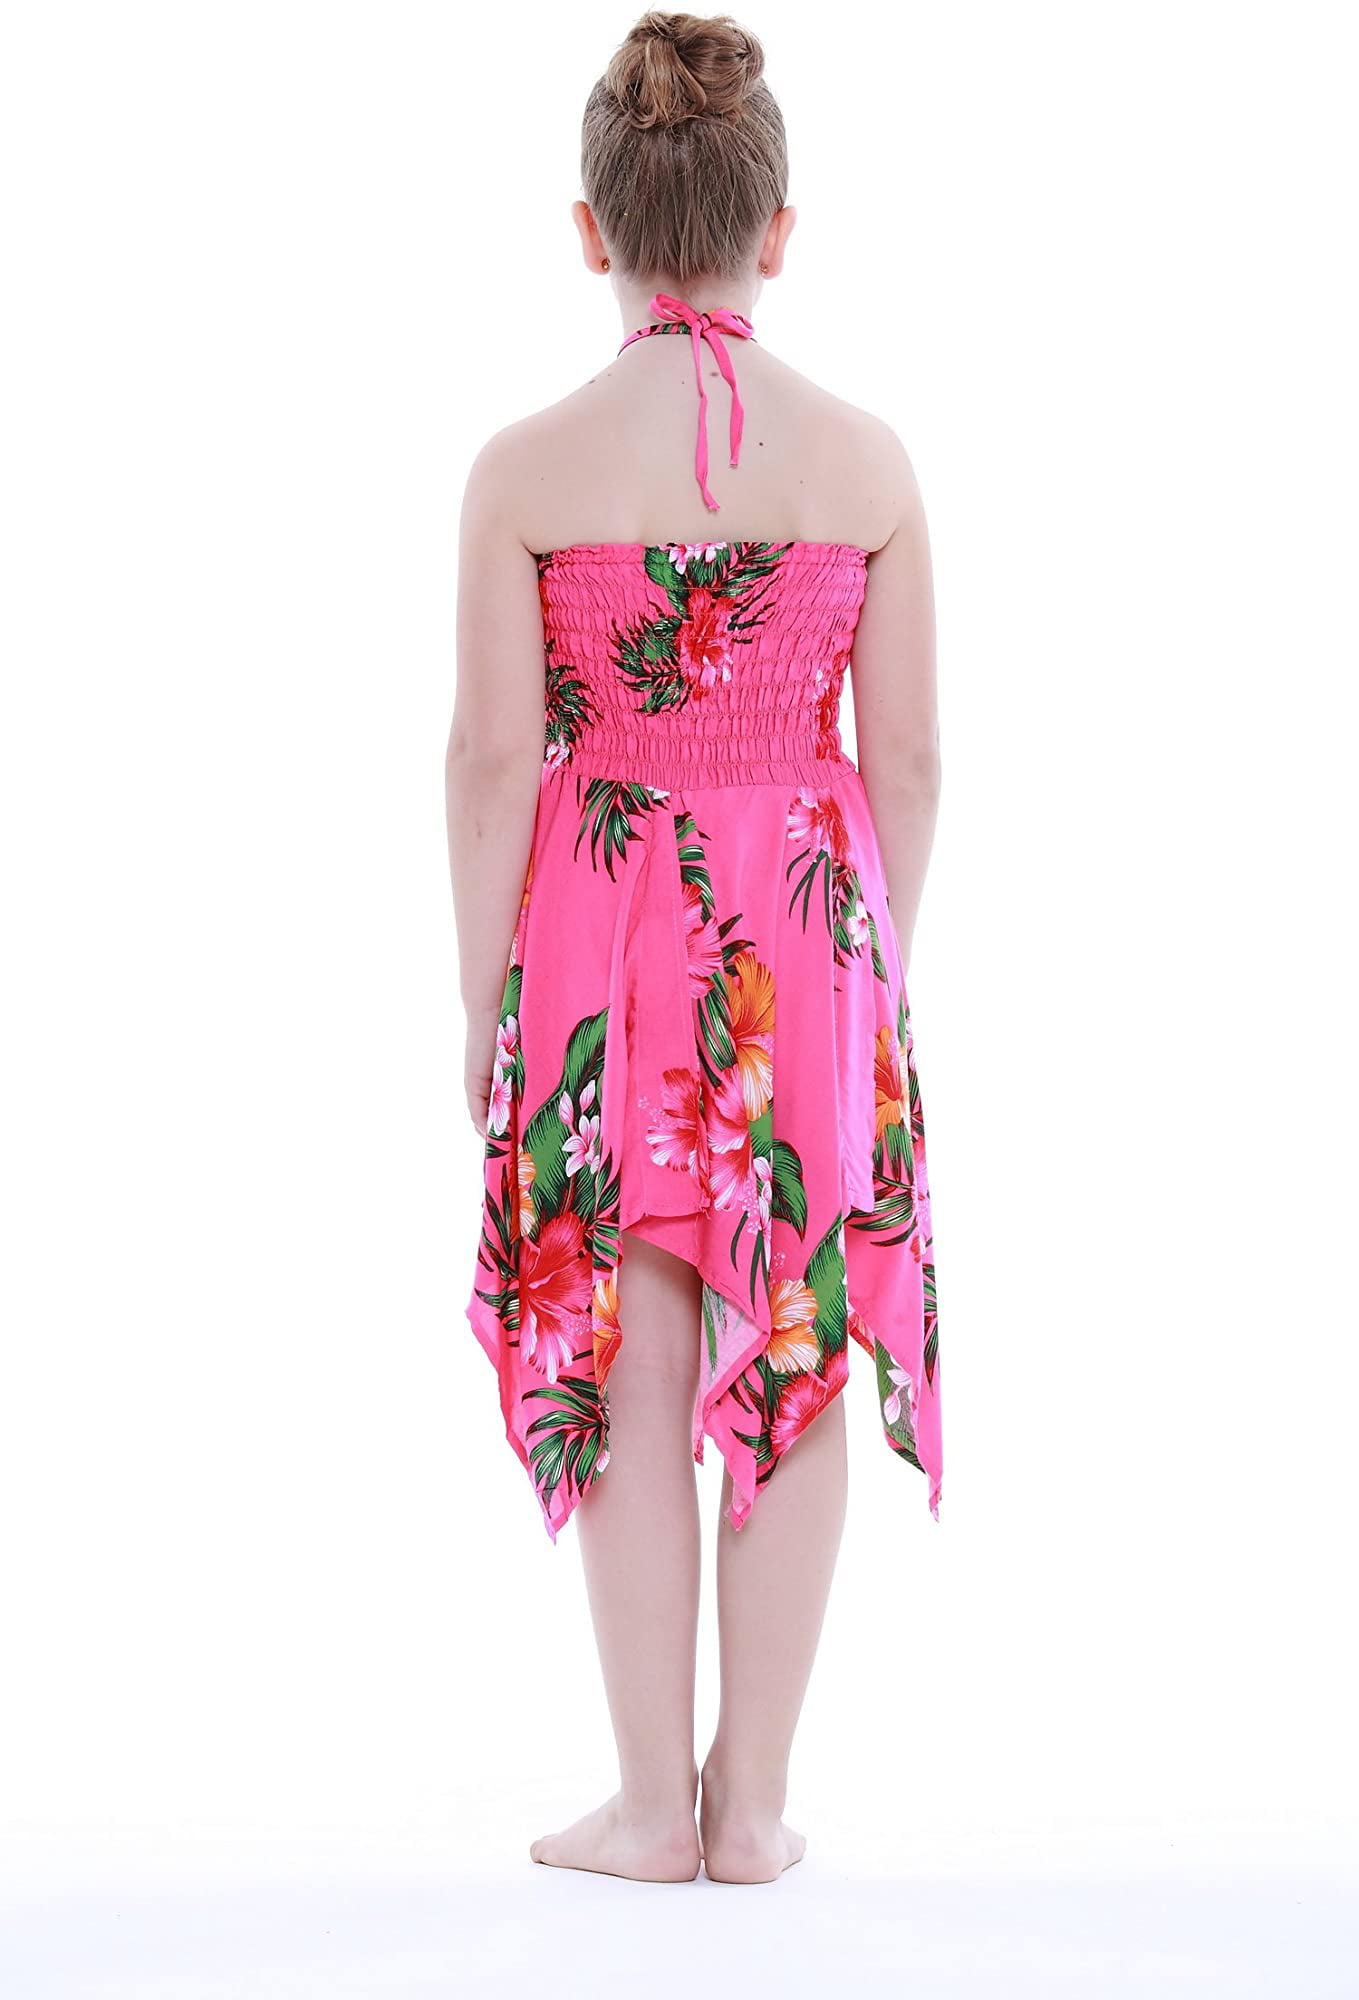 Girl Hot Pink Hawaiian Luau Dress in Various Styles